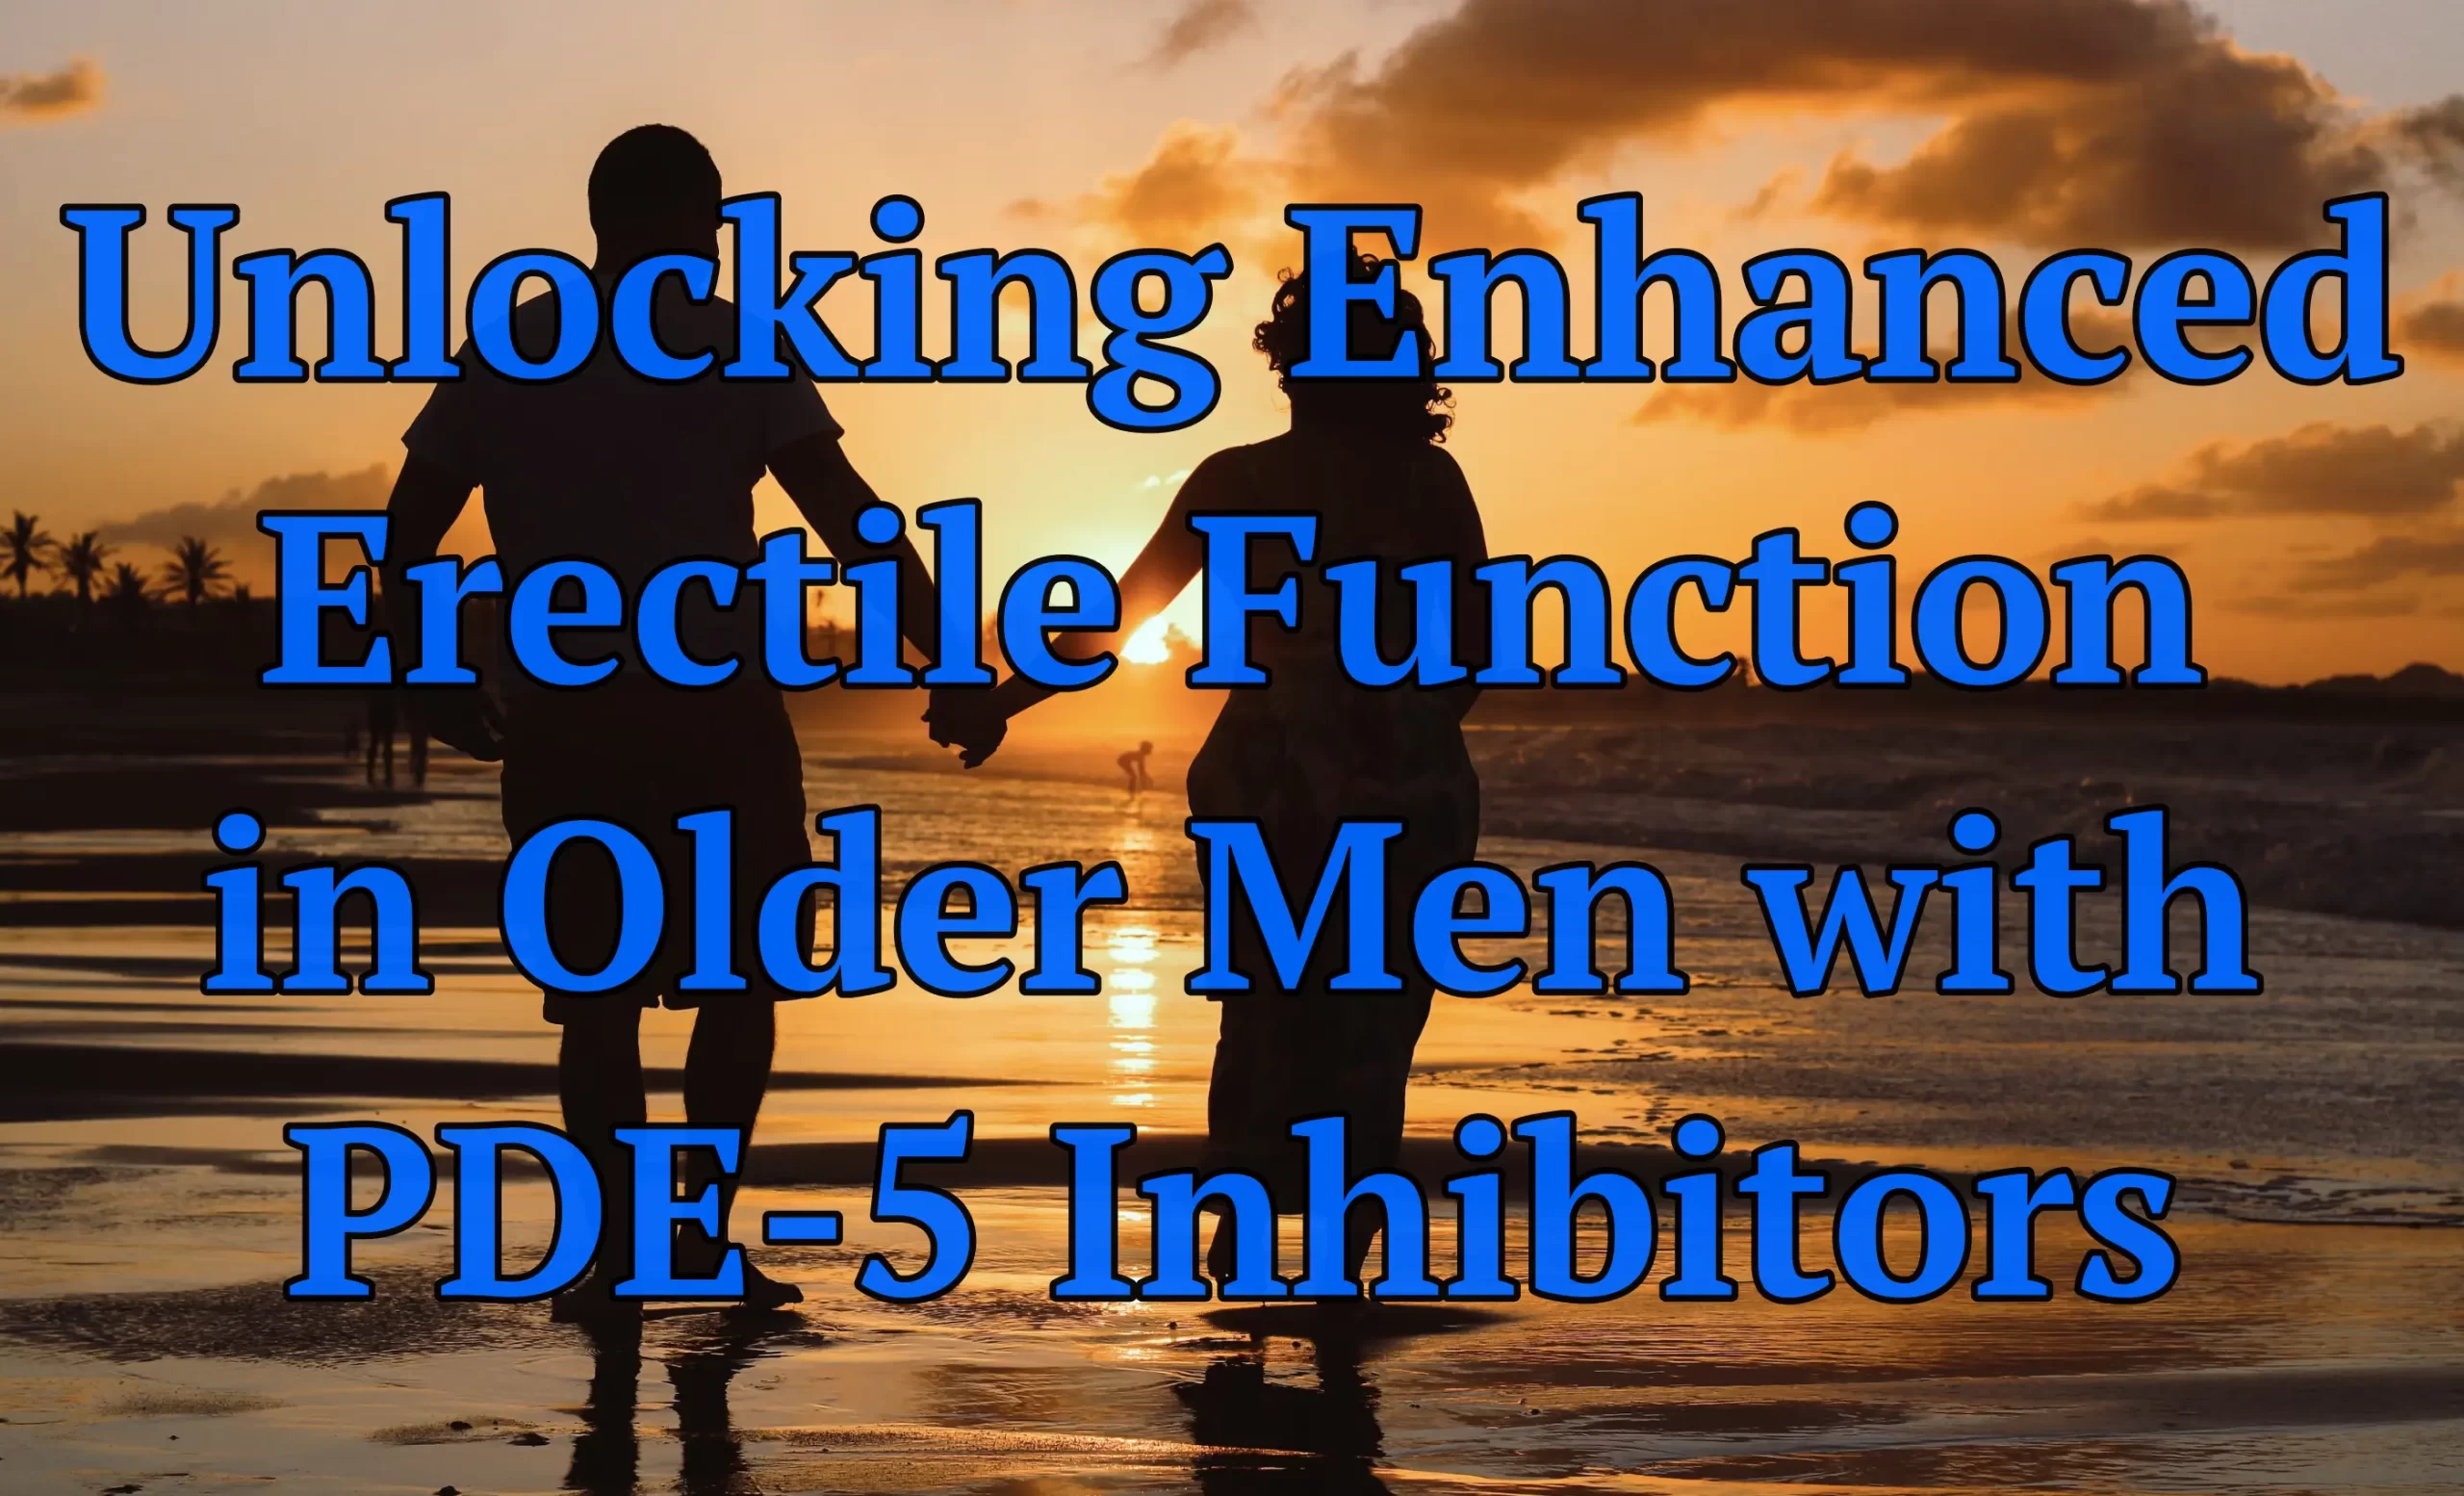 Unlocking Enhanced Erectile Function in Older Men with PDE-5 Inhibitors